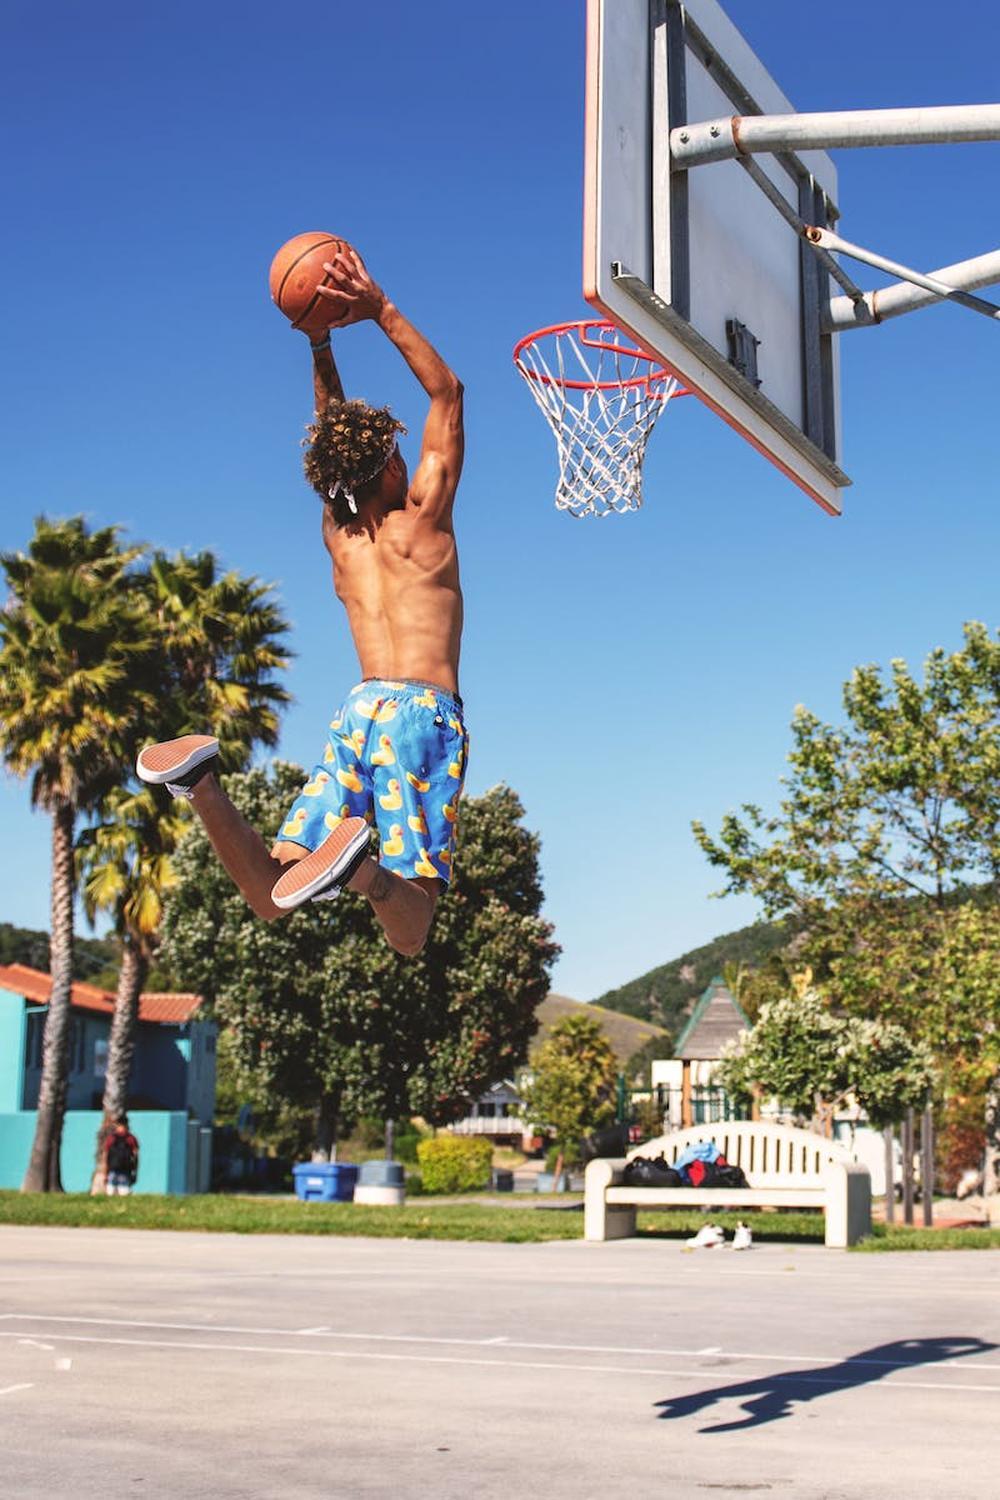 /assets/Photos/pexel/man_wearing_blue_and_yellow_shorts_playing_basketb.jpg